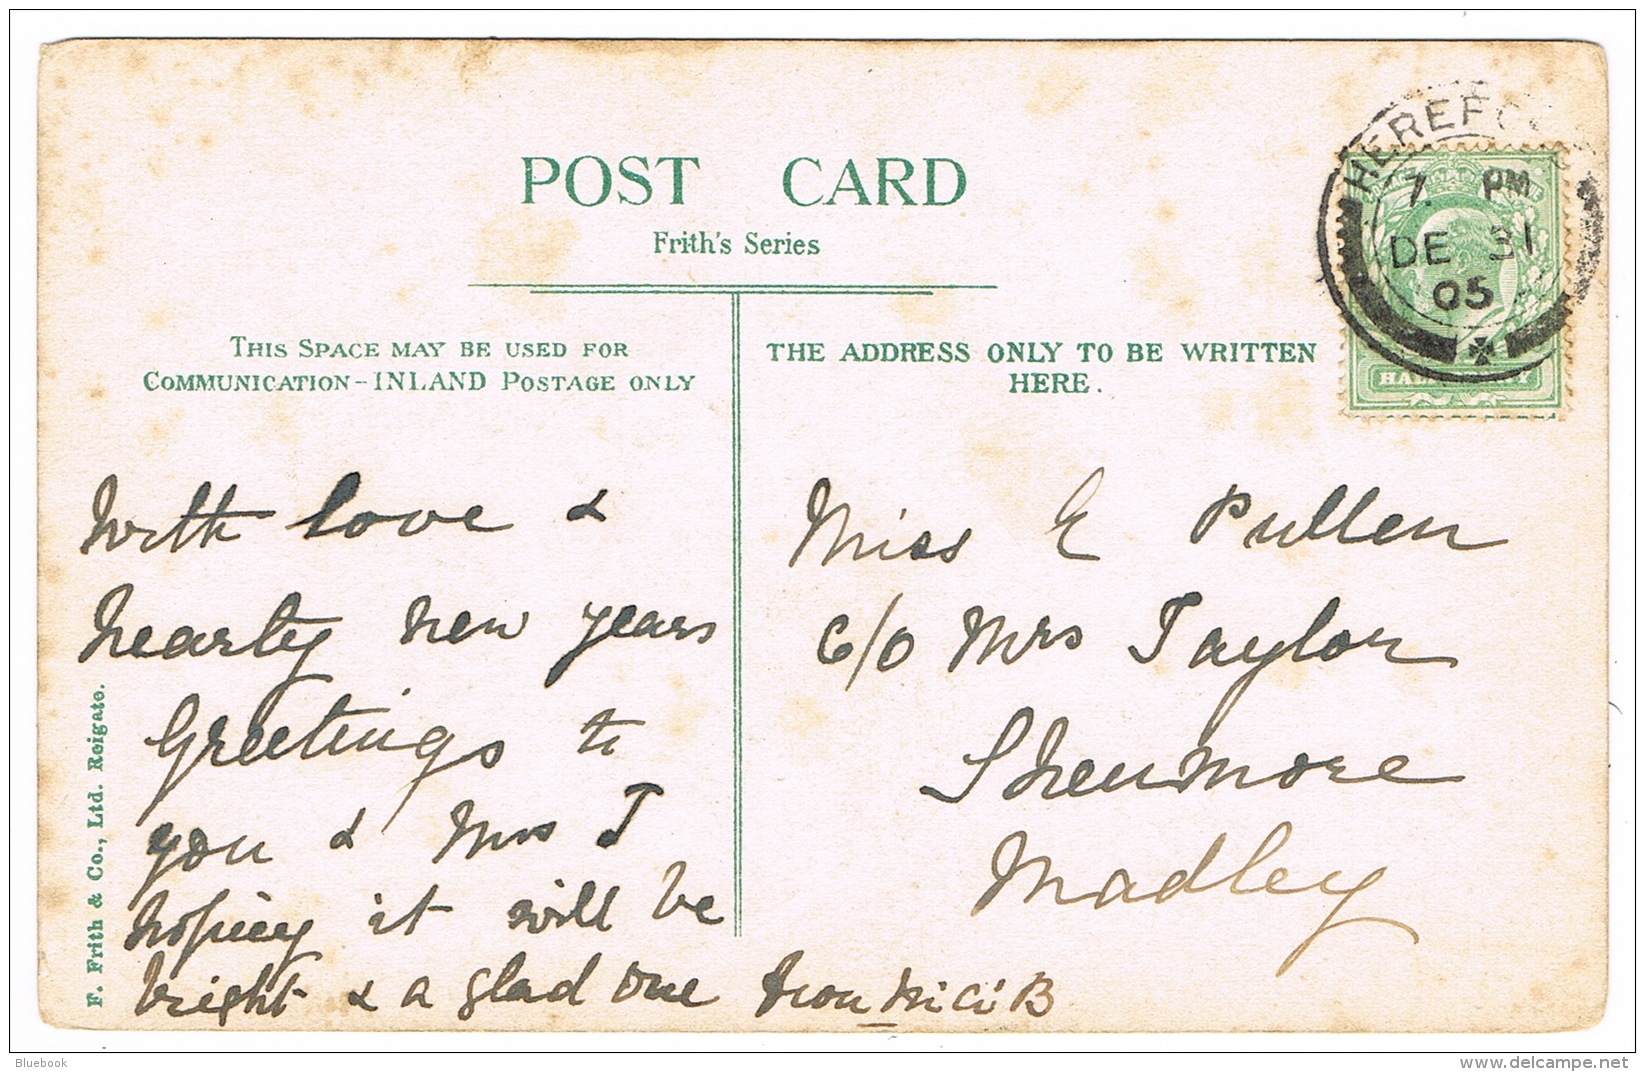 RB 1133 - 1905 Postcard - Hereford Suspension Bridge - Herefordshire - Herefordshire